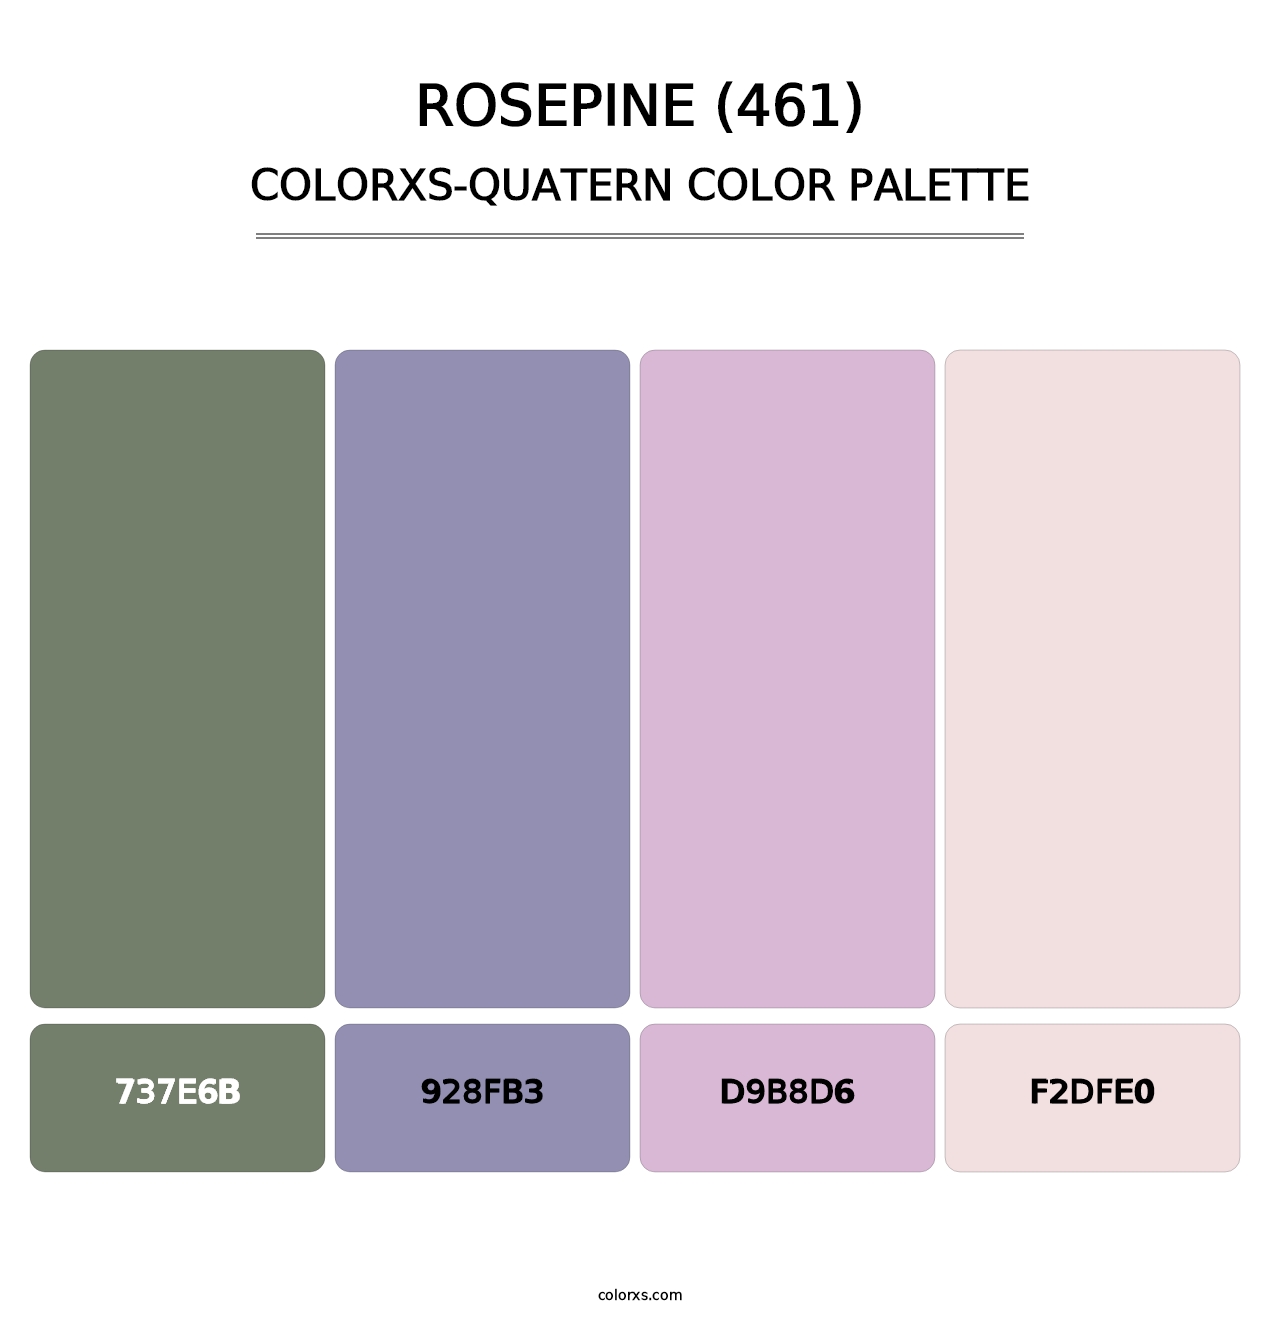 Rosepine (461) - Colorxs Quatern Palette